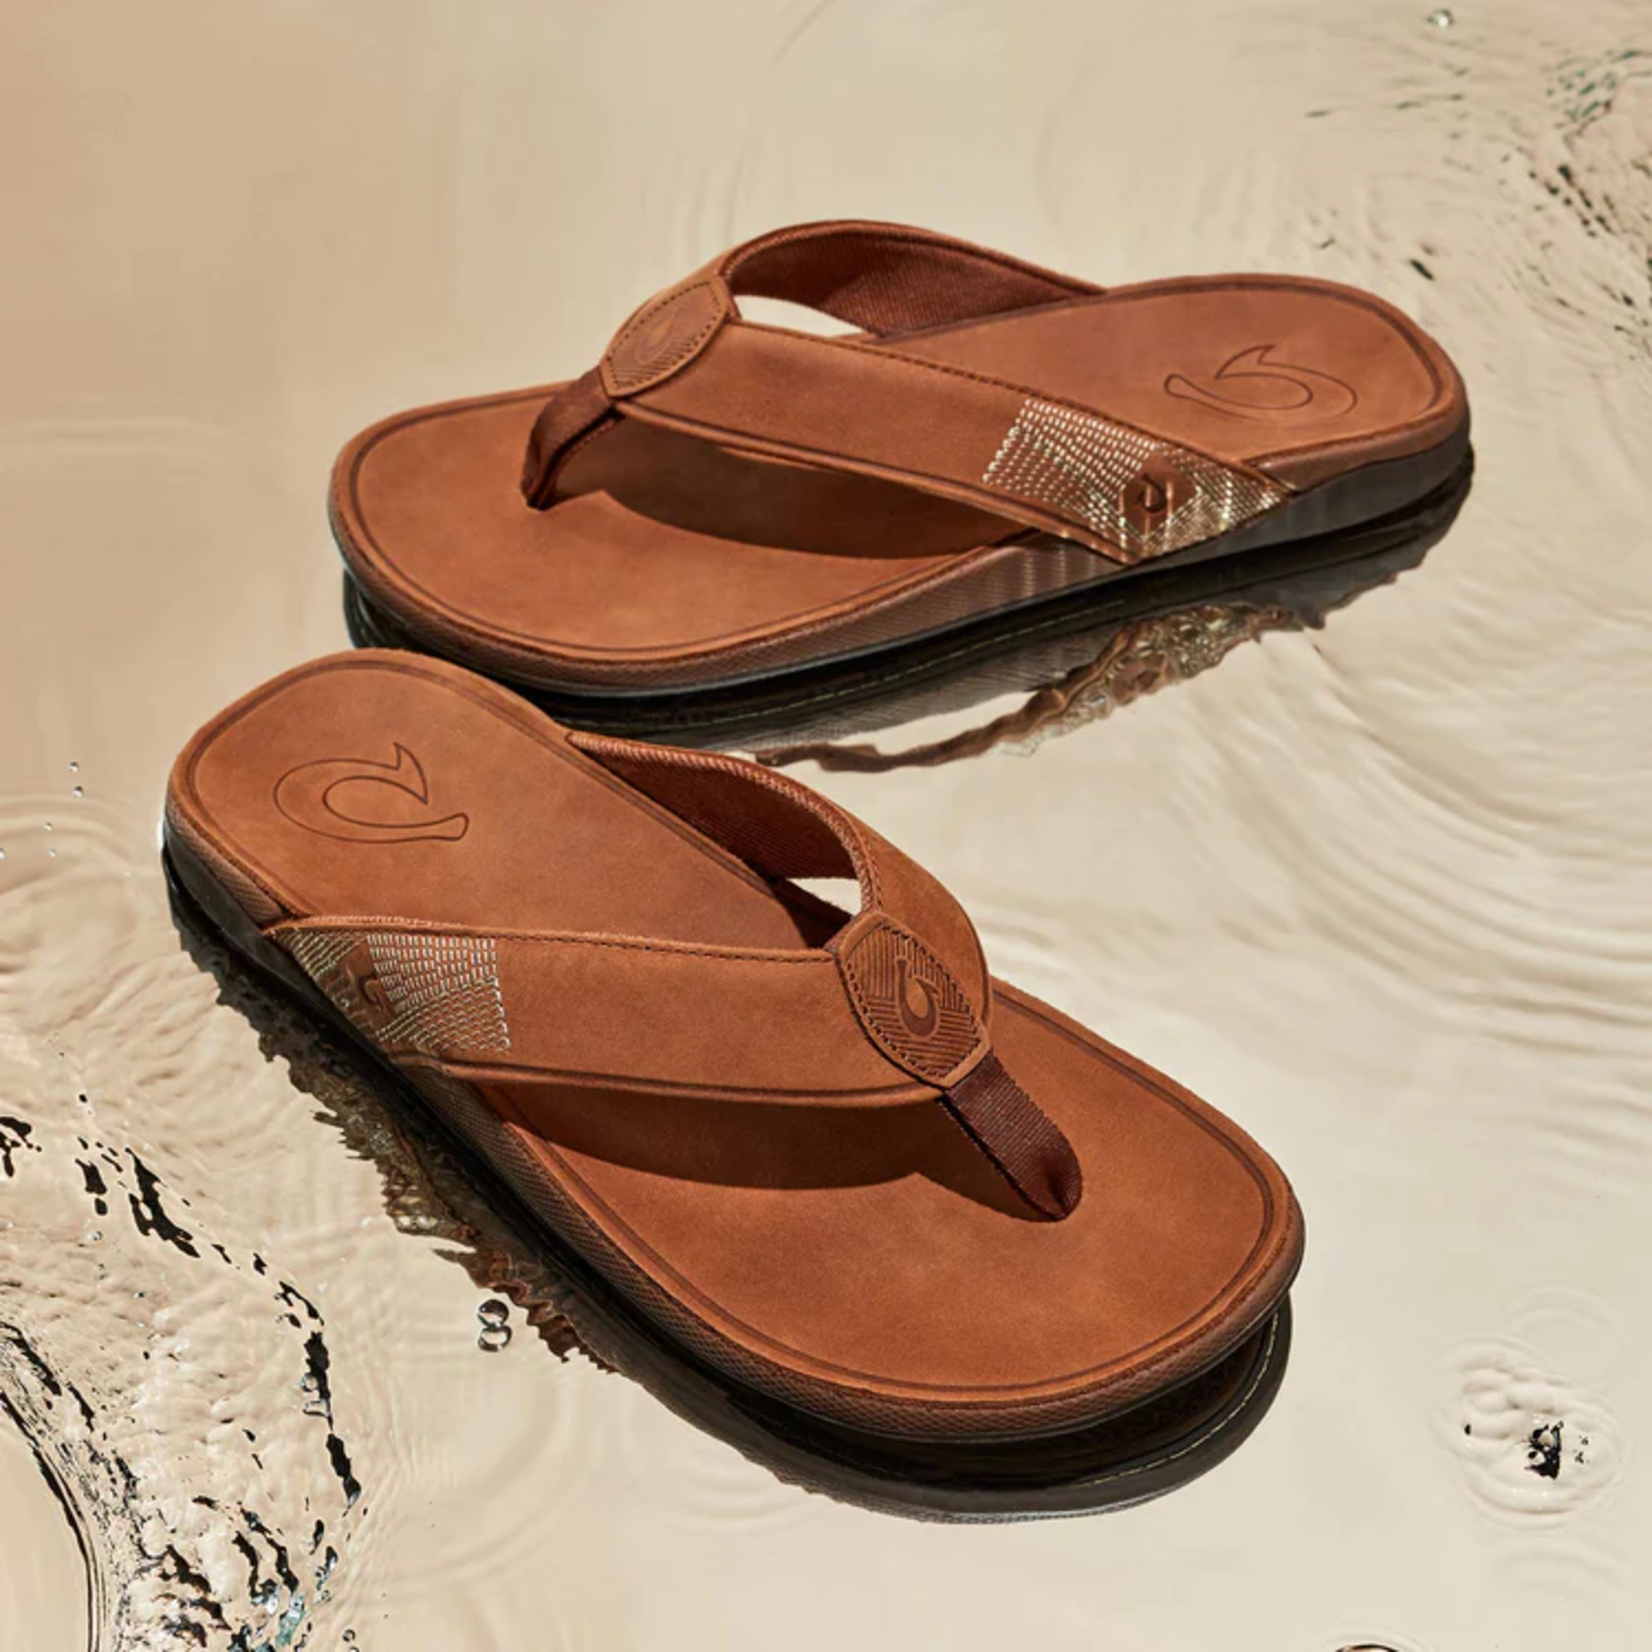 OluKai Tuahine | Men’s Waterproof Leather Beach Sandals